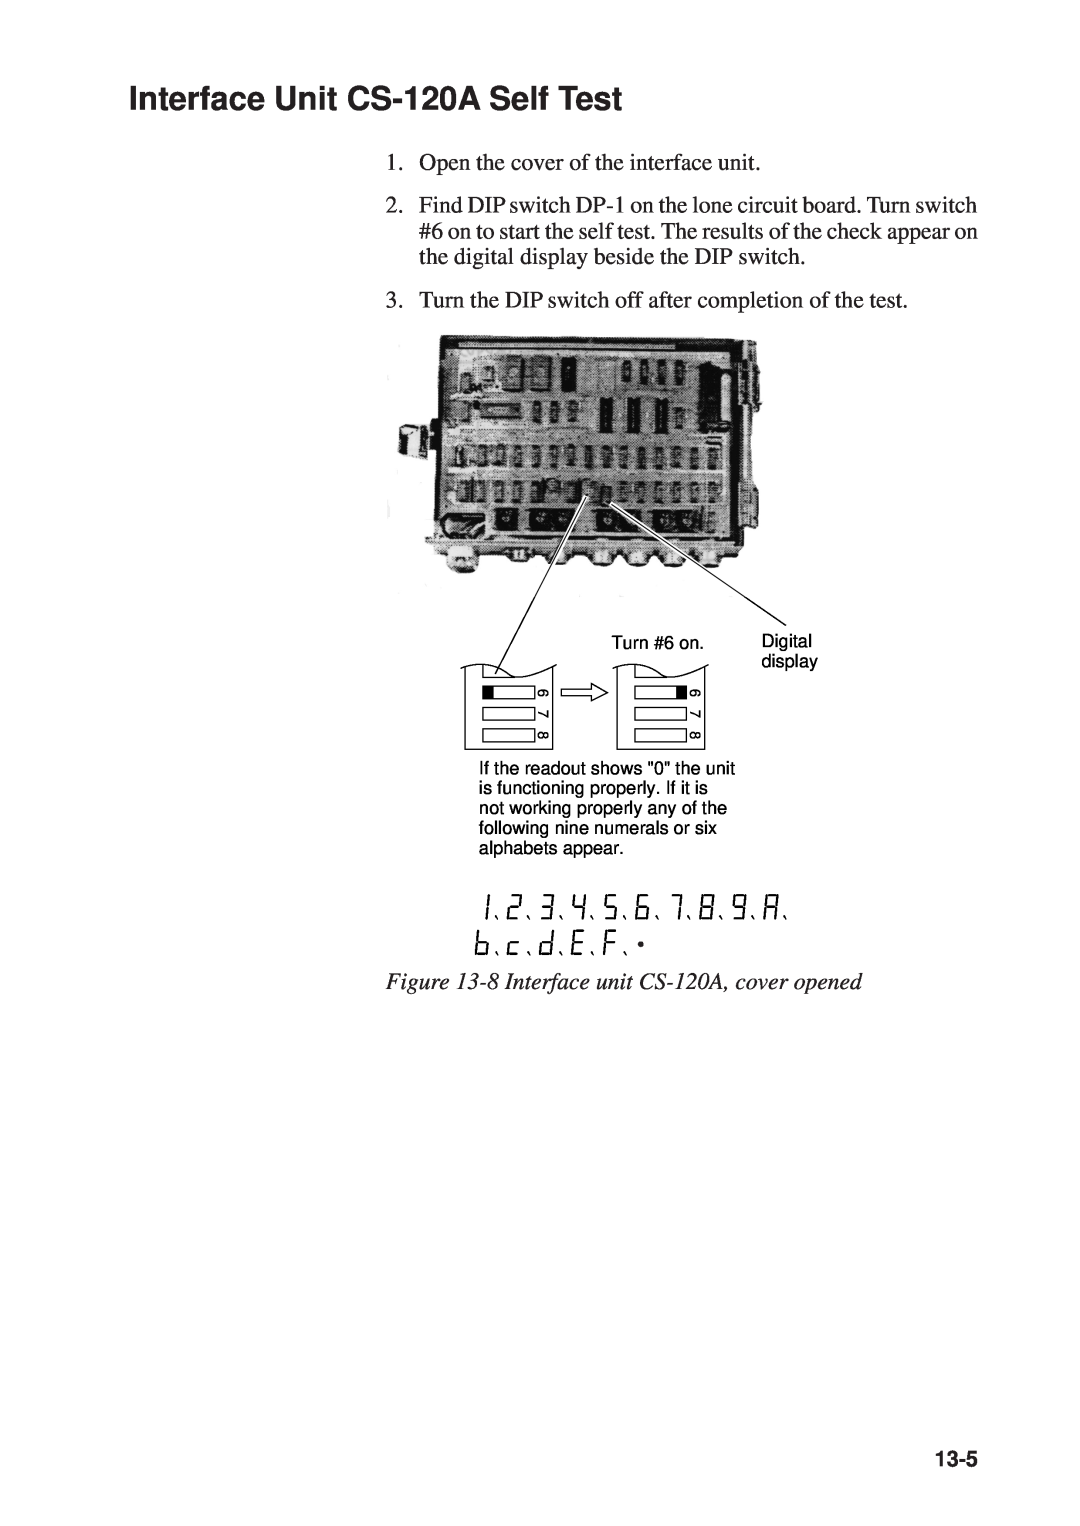 Furuno CSH-53 manual Interface Unit CS-120A Self Test, 8 Interface unit CS-120A, cover opened 